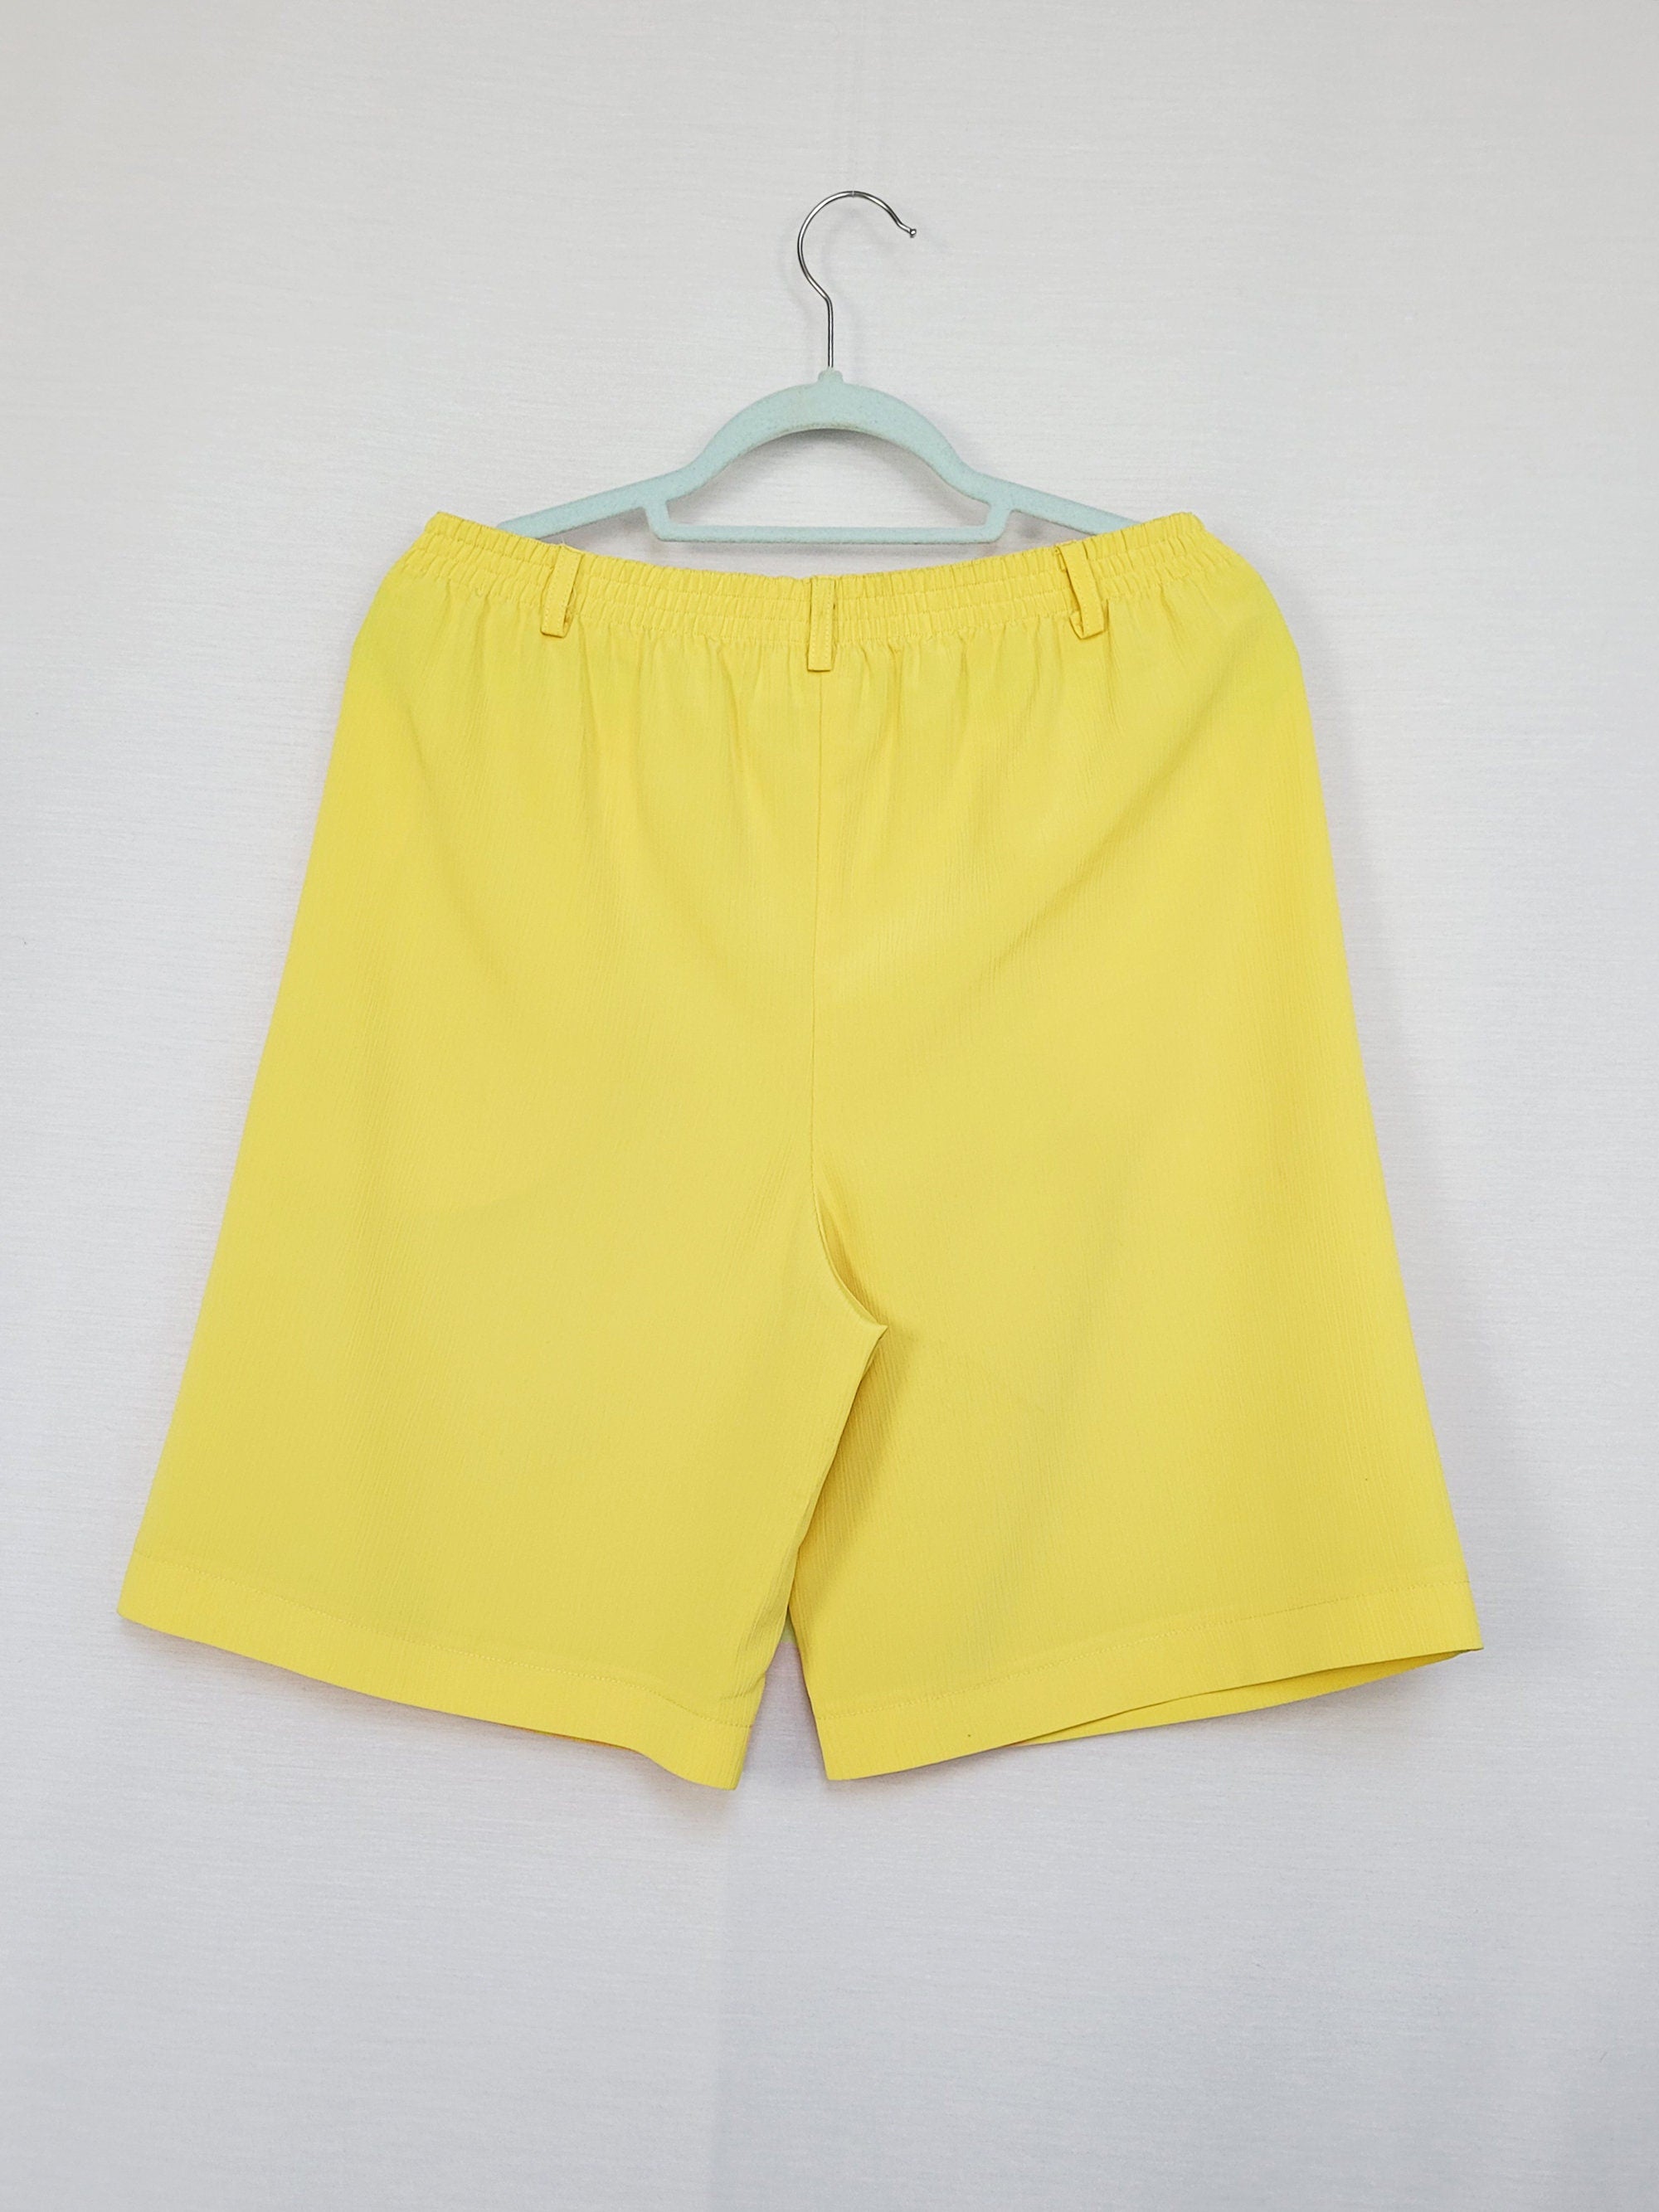 Vintage 90s minimalist yellow wide summer shorts